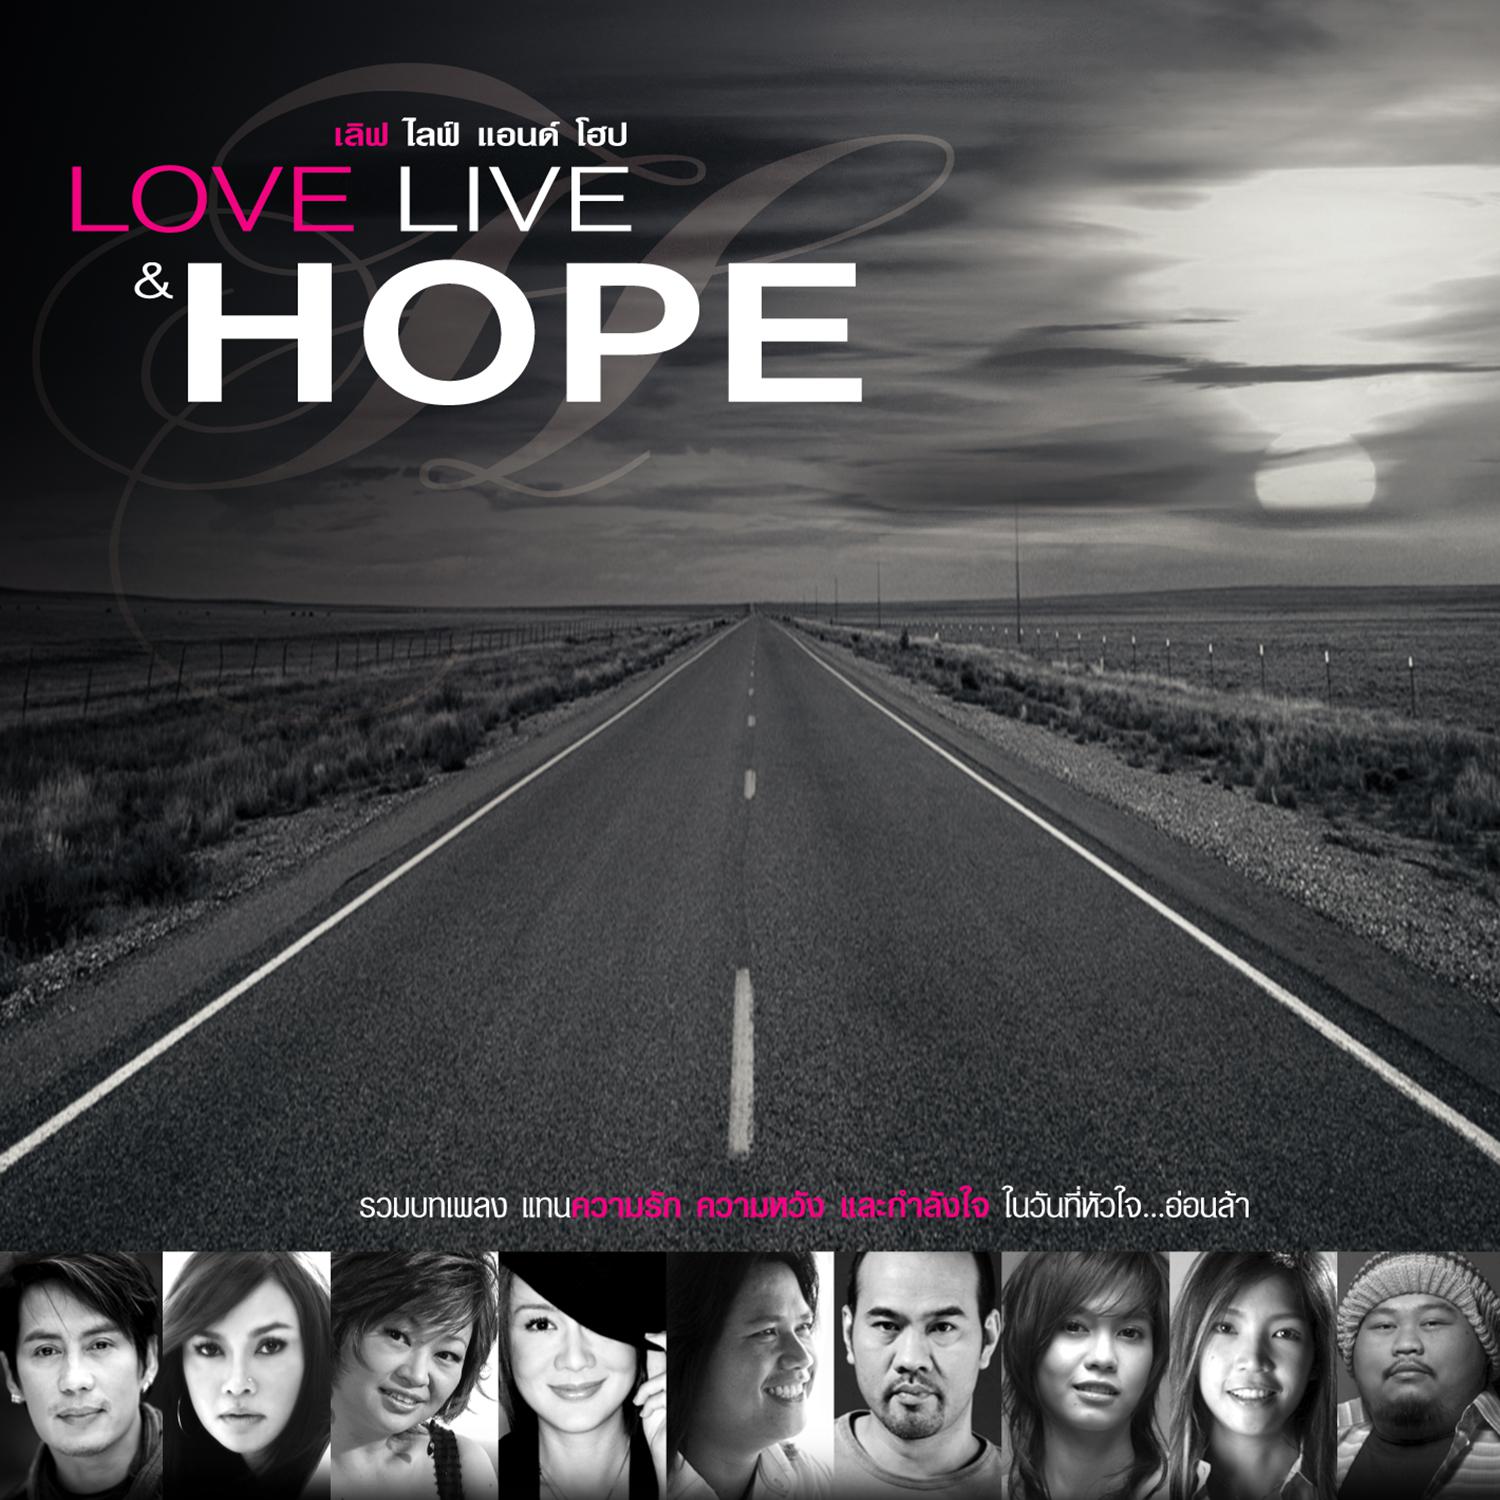 LOVE LIVE & HOPE